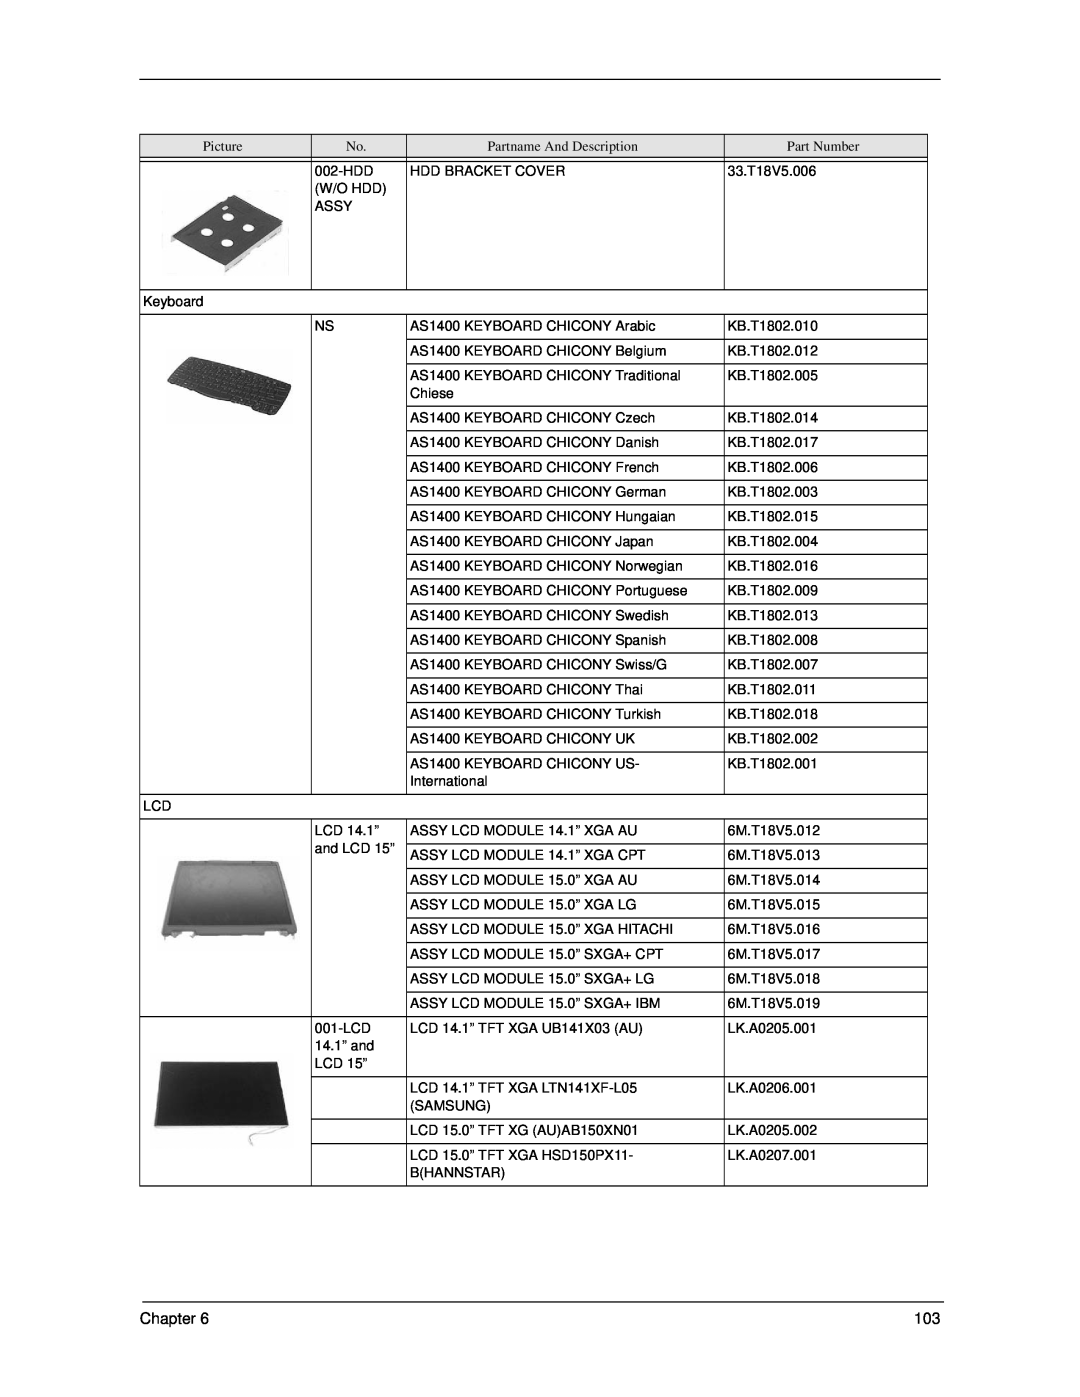 Acer 270 manual Chapter, LK.A0206.001, LK.A0207.001 